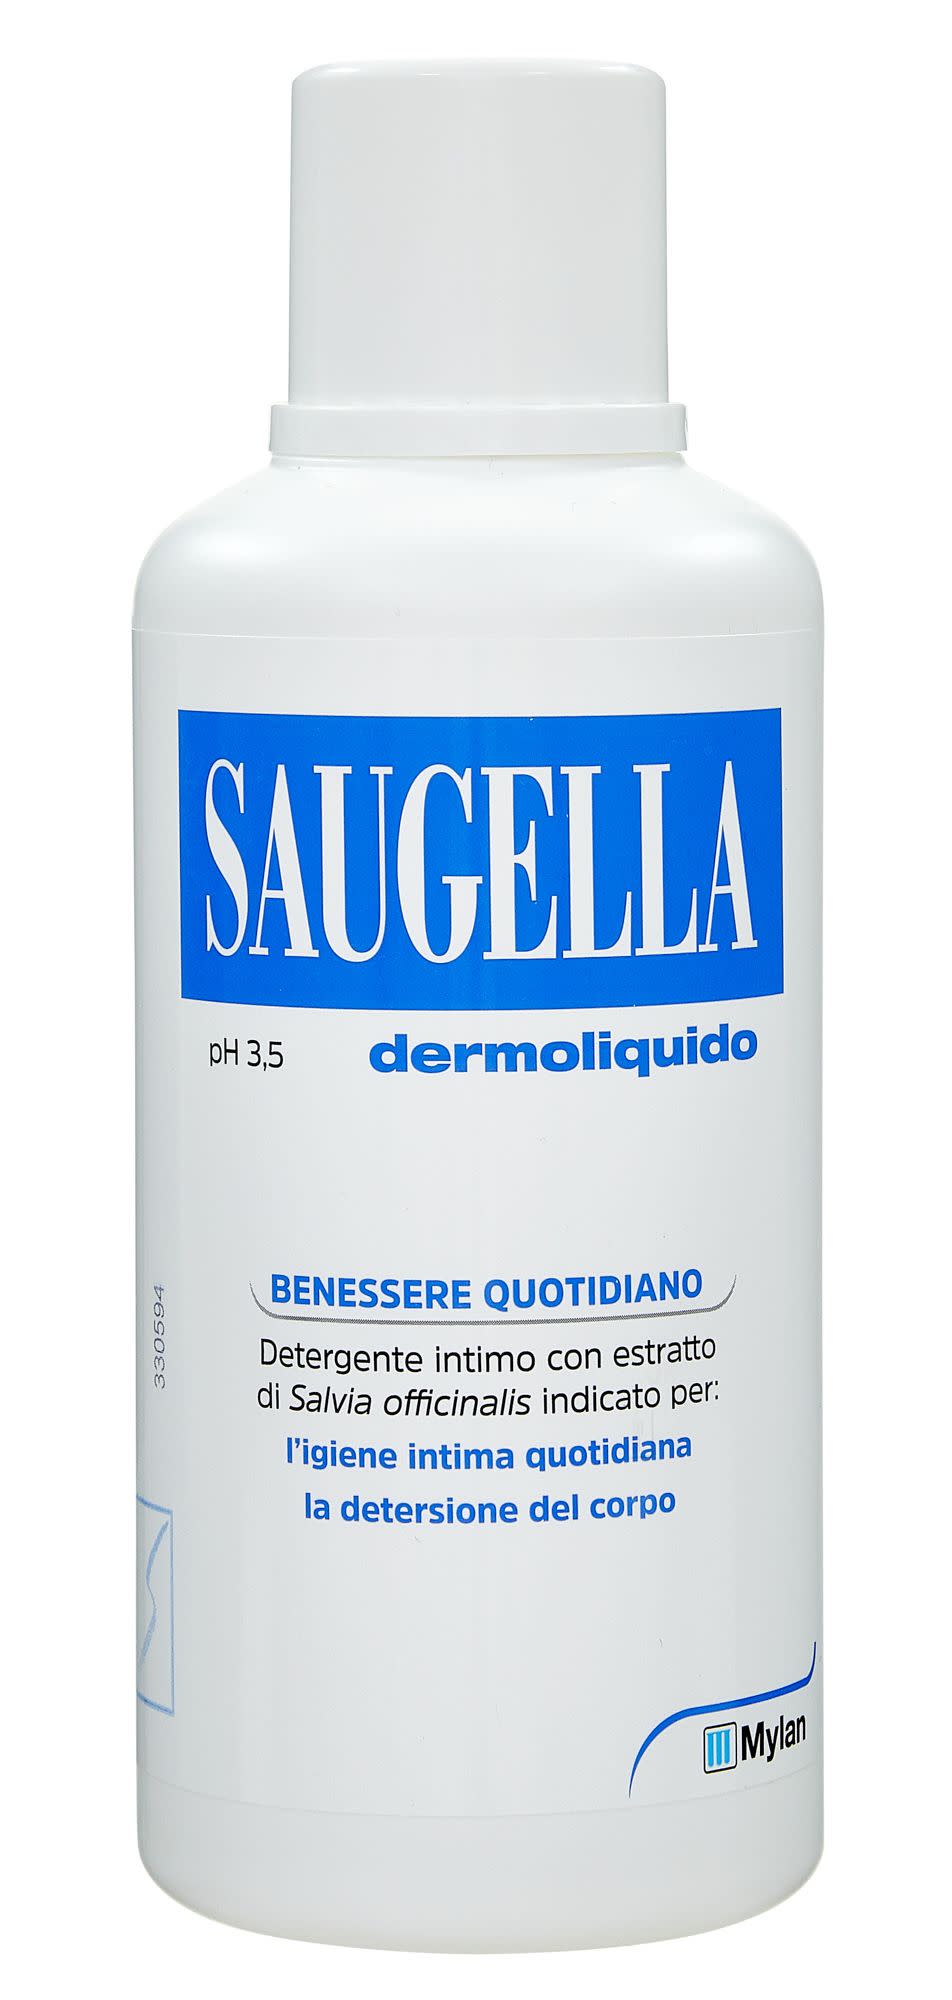 908960305 - Saugella Dermoliquido Detergente Intimo a base di Salvia Officinalis 500ml - 1181866_2.jpg